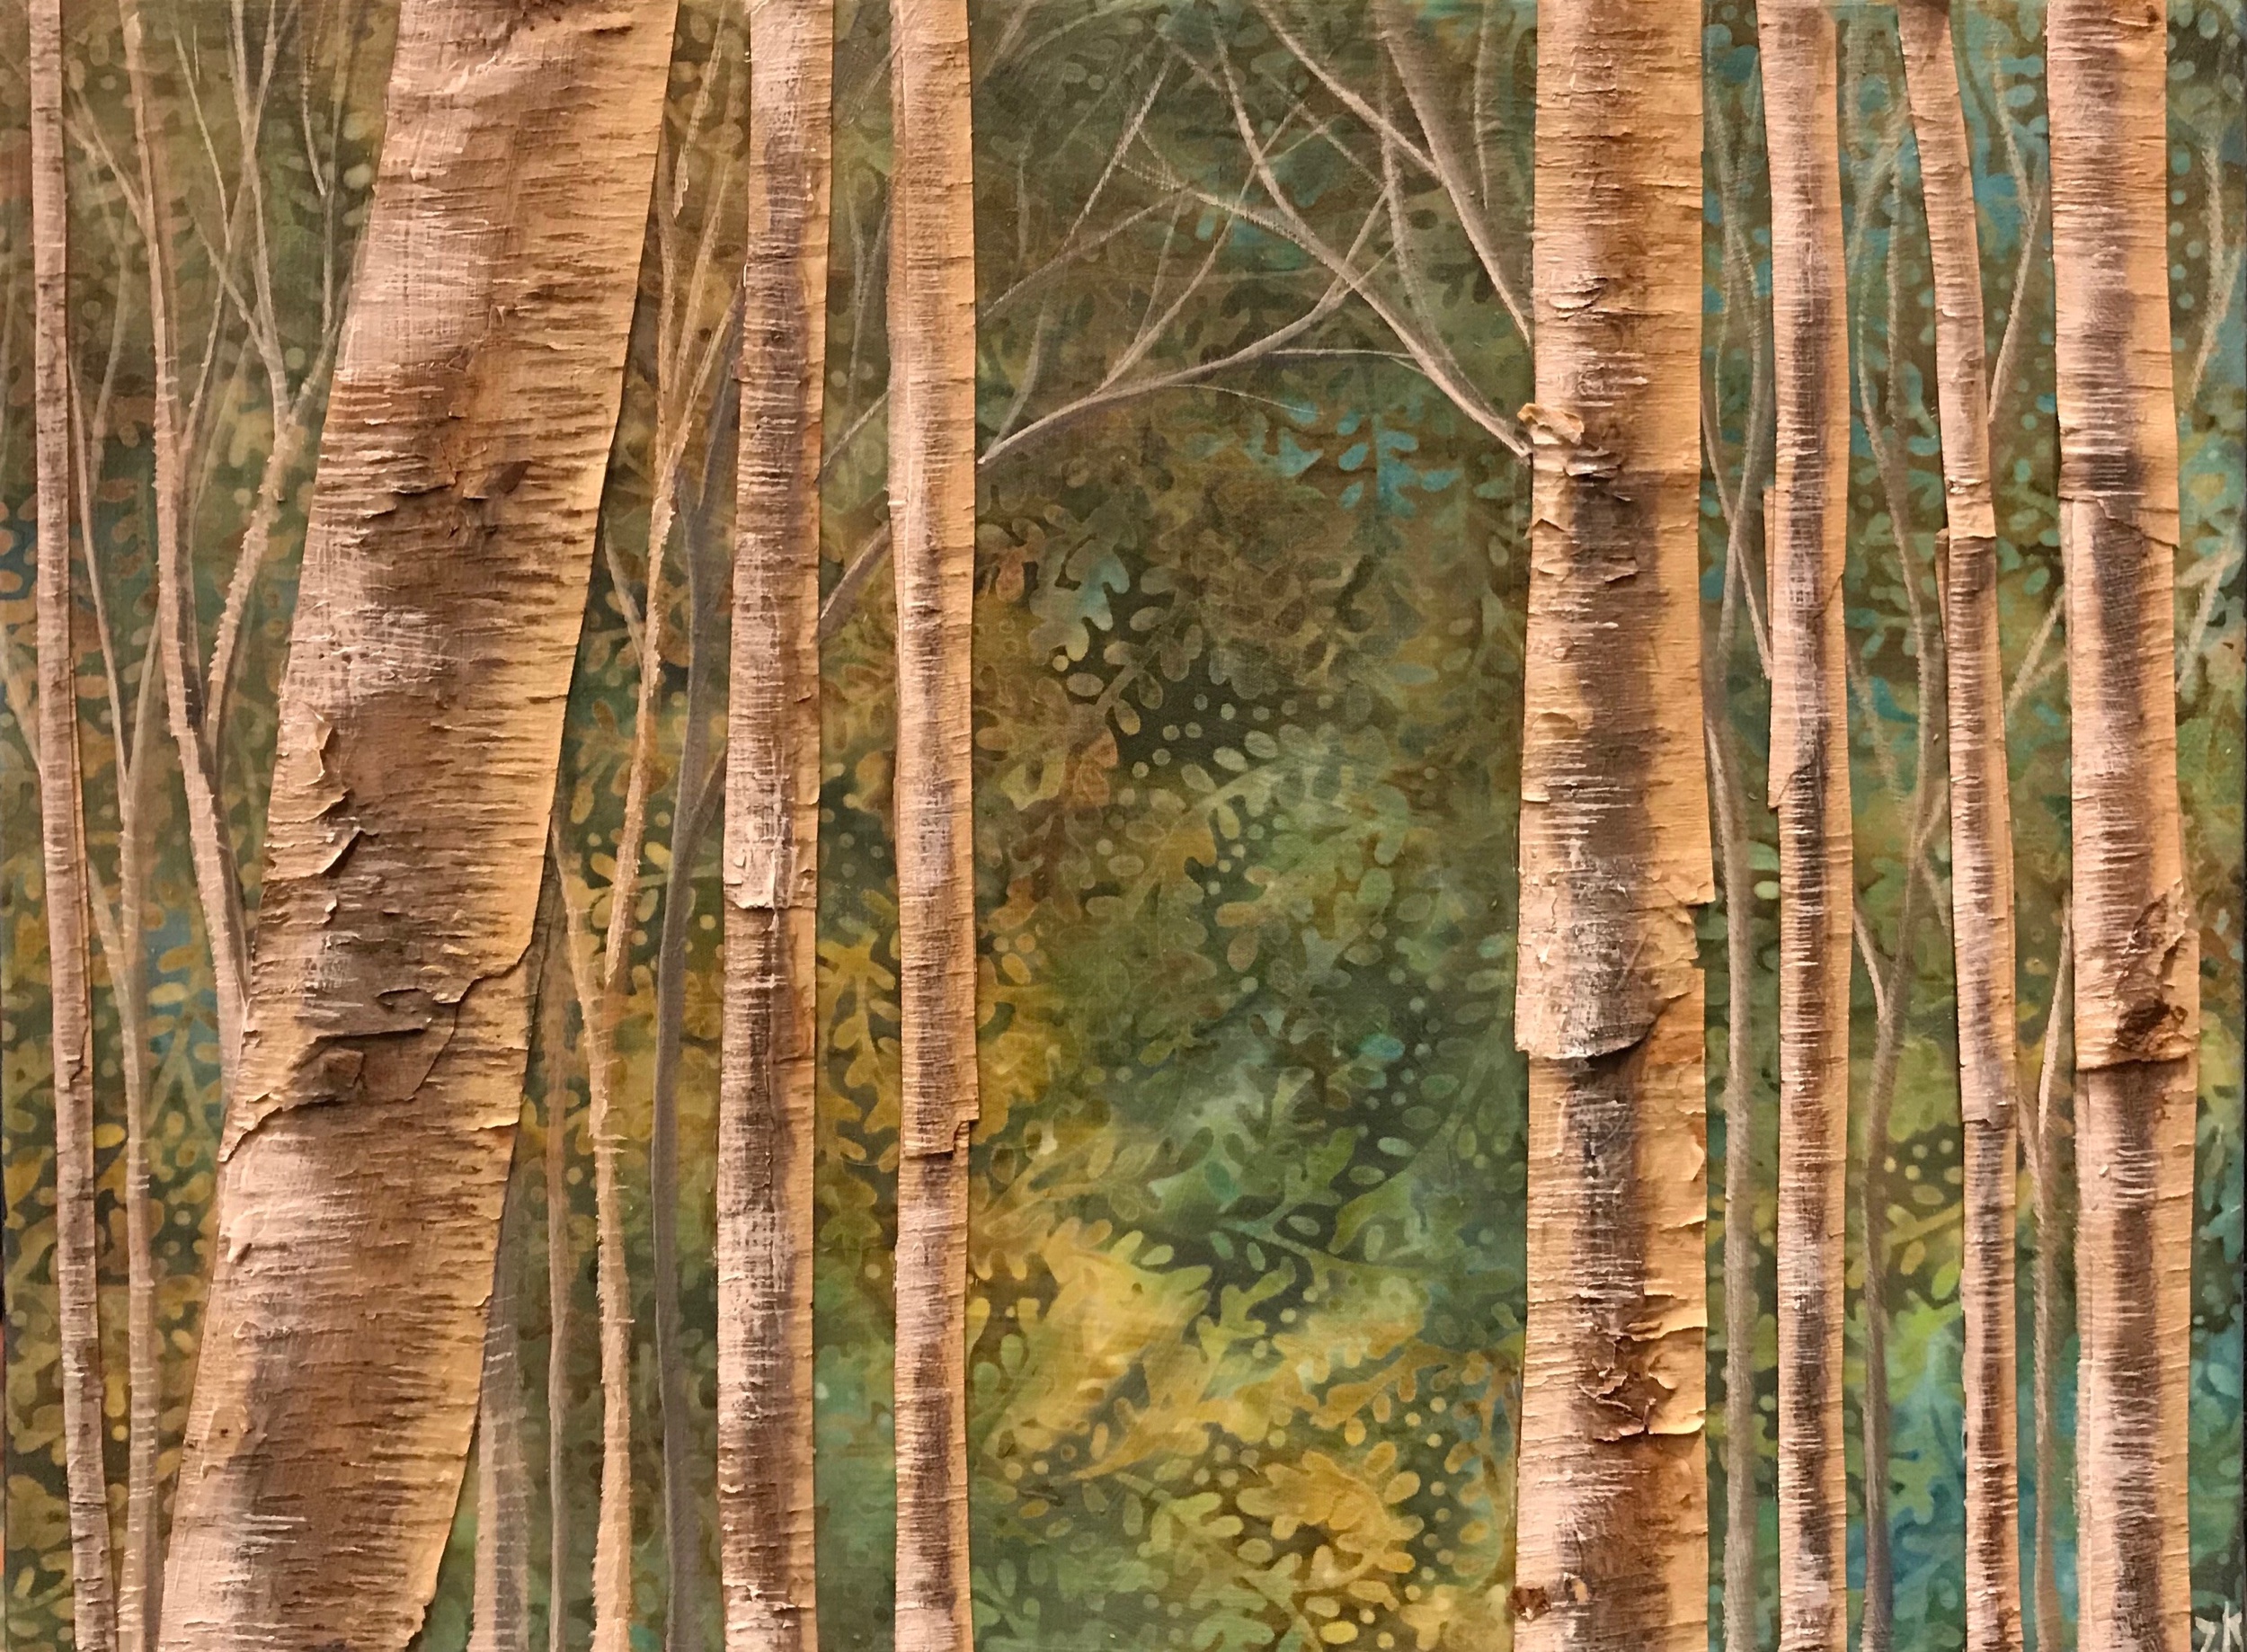  Sold Mixed Media: birch bark and acrylic on fabric. 8” x 10” 